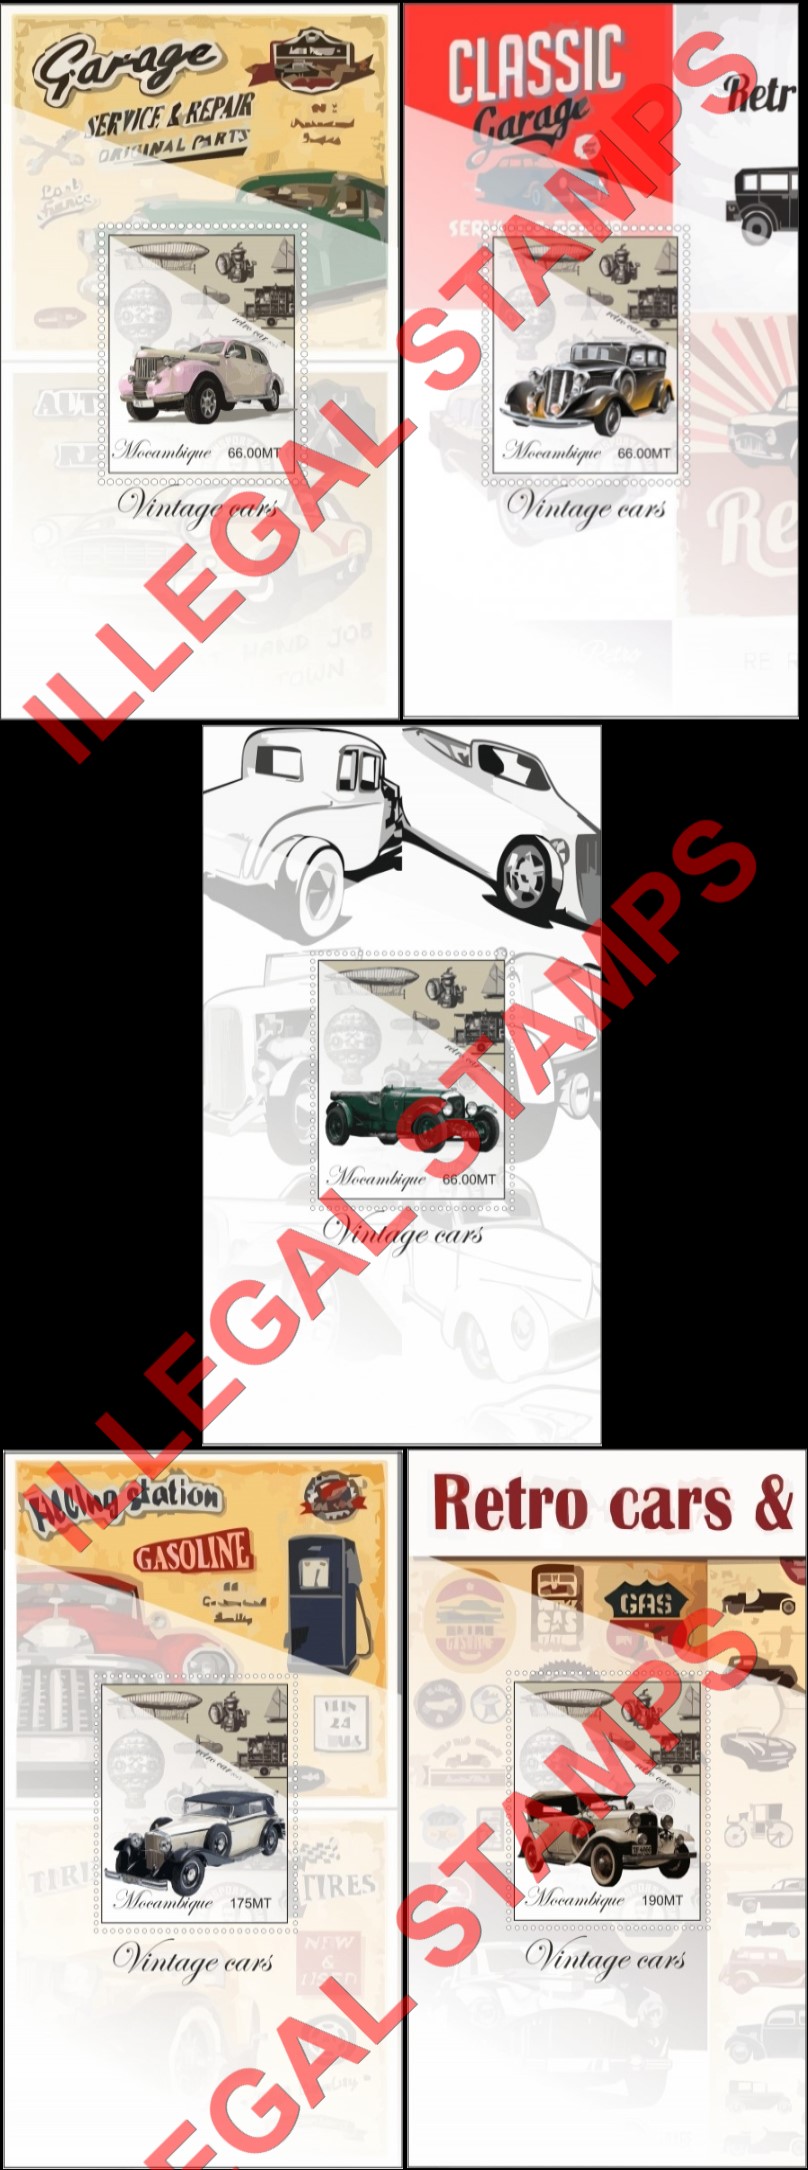  Mozambique 2015 Vintage Cars Retro Counterfeit Illegal Stamp Souvenir Sheets of 1